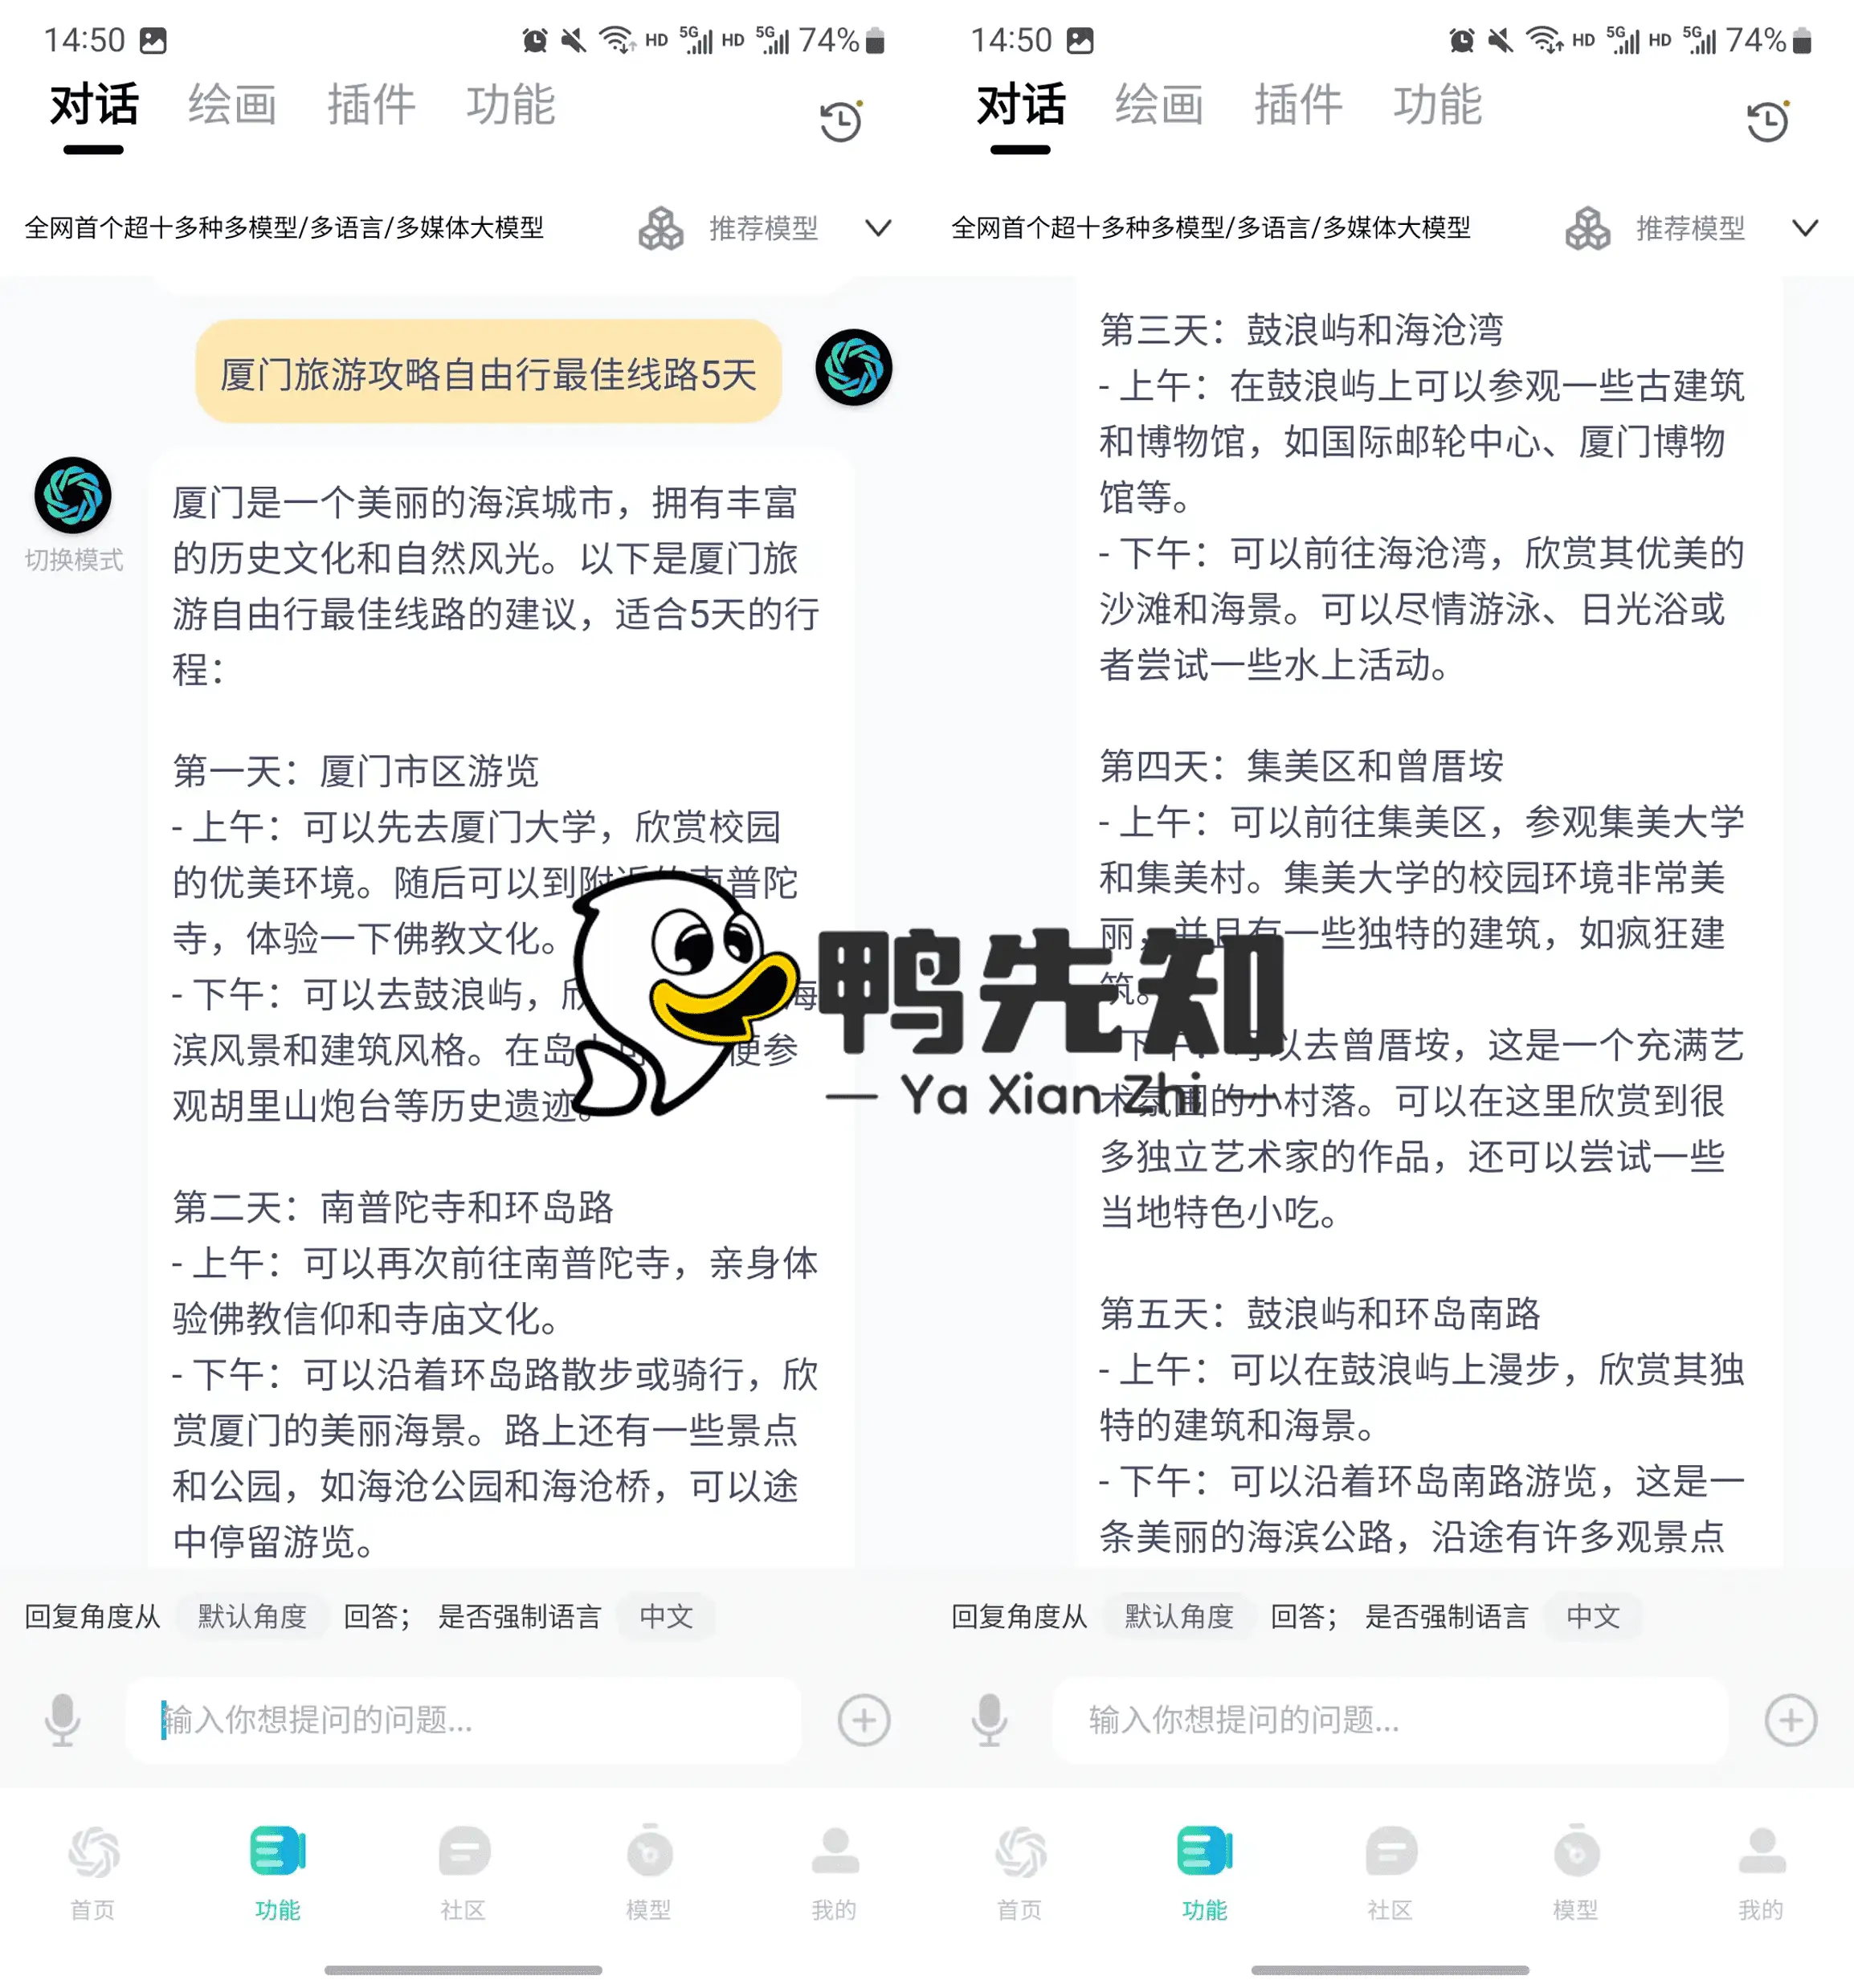 AIChat-王炸福利，上千款AI模型免费用！